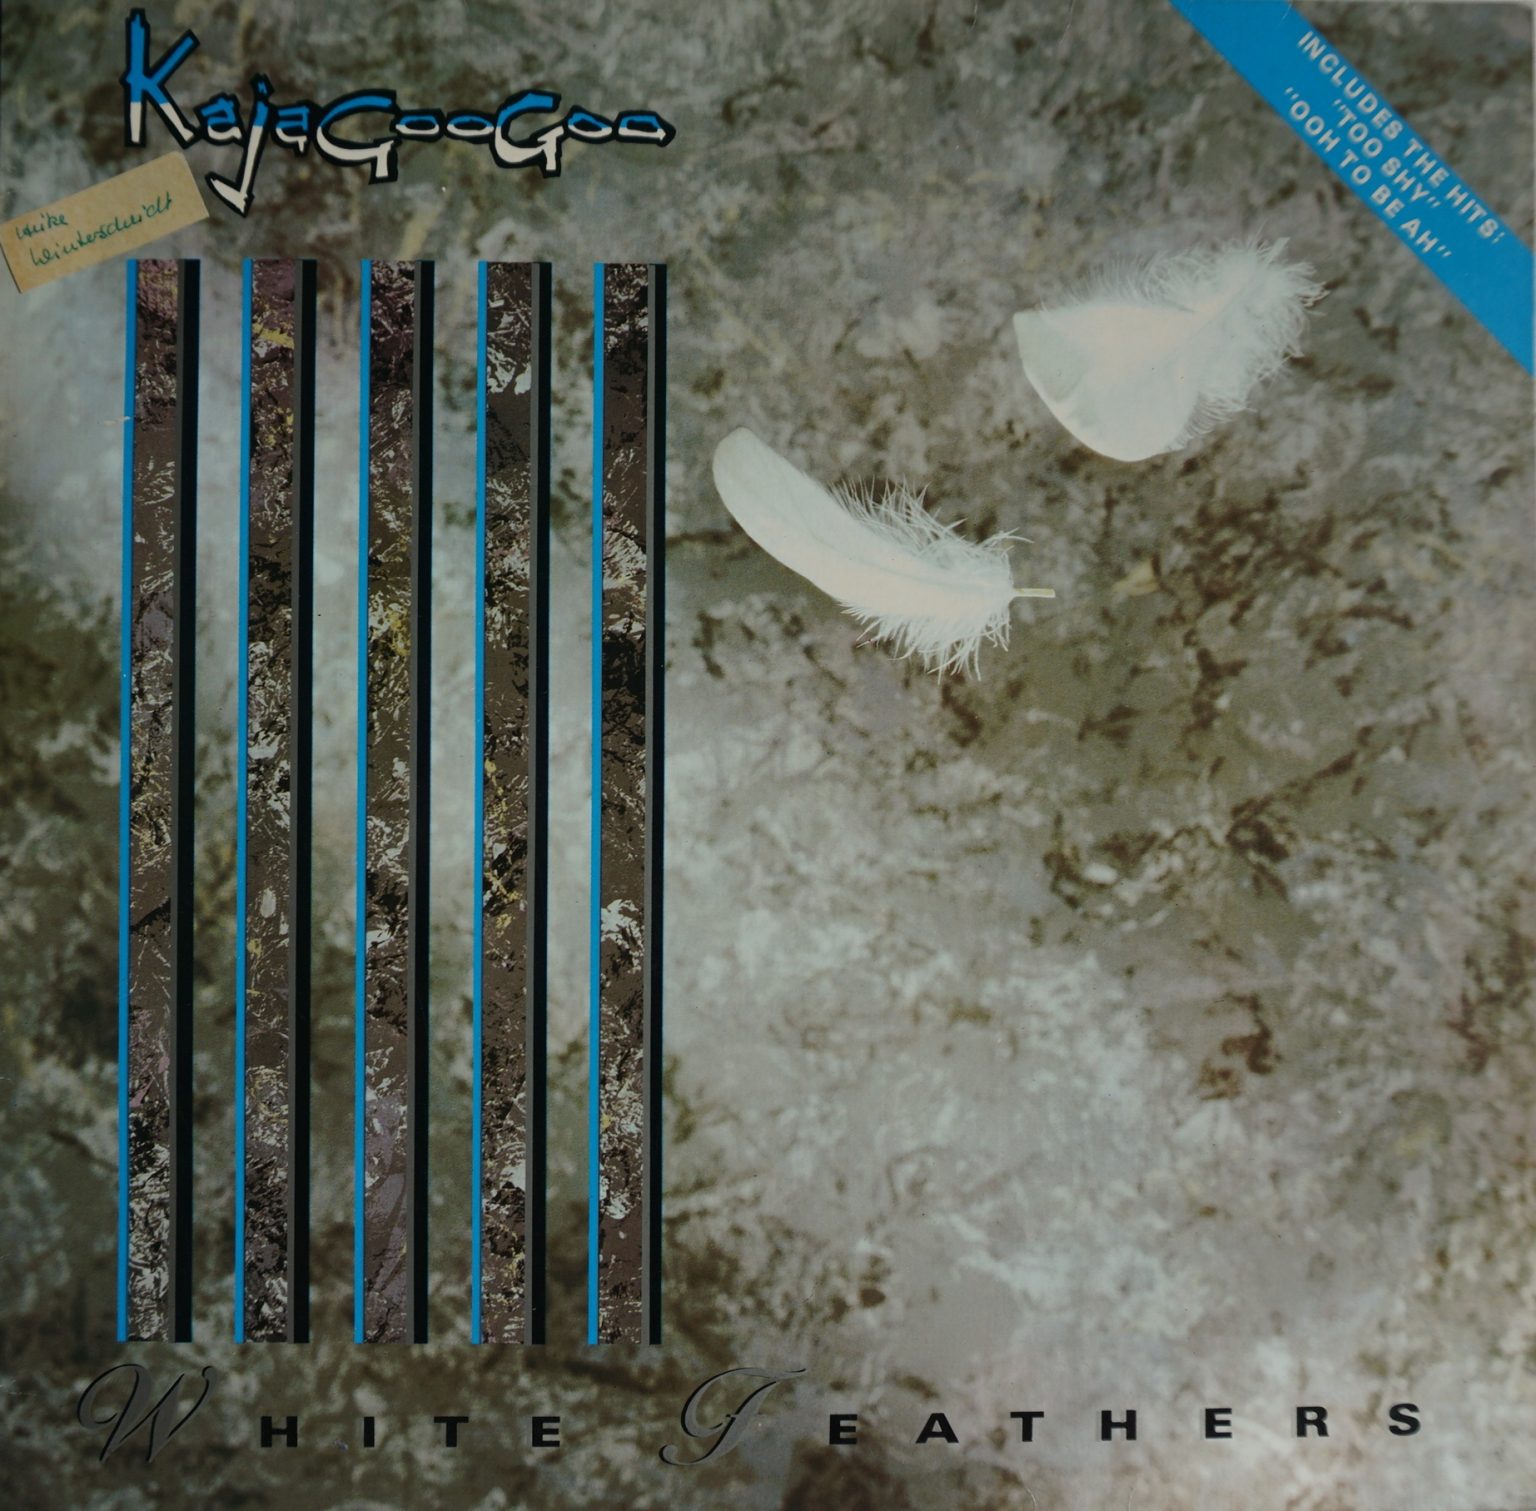 Kajagoogoo – White Feathers [Vinyl LP] (VG+/VG+)